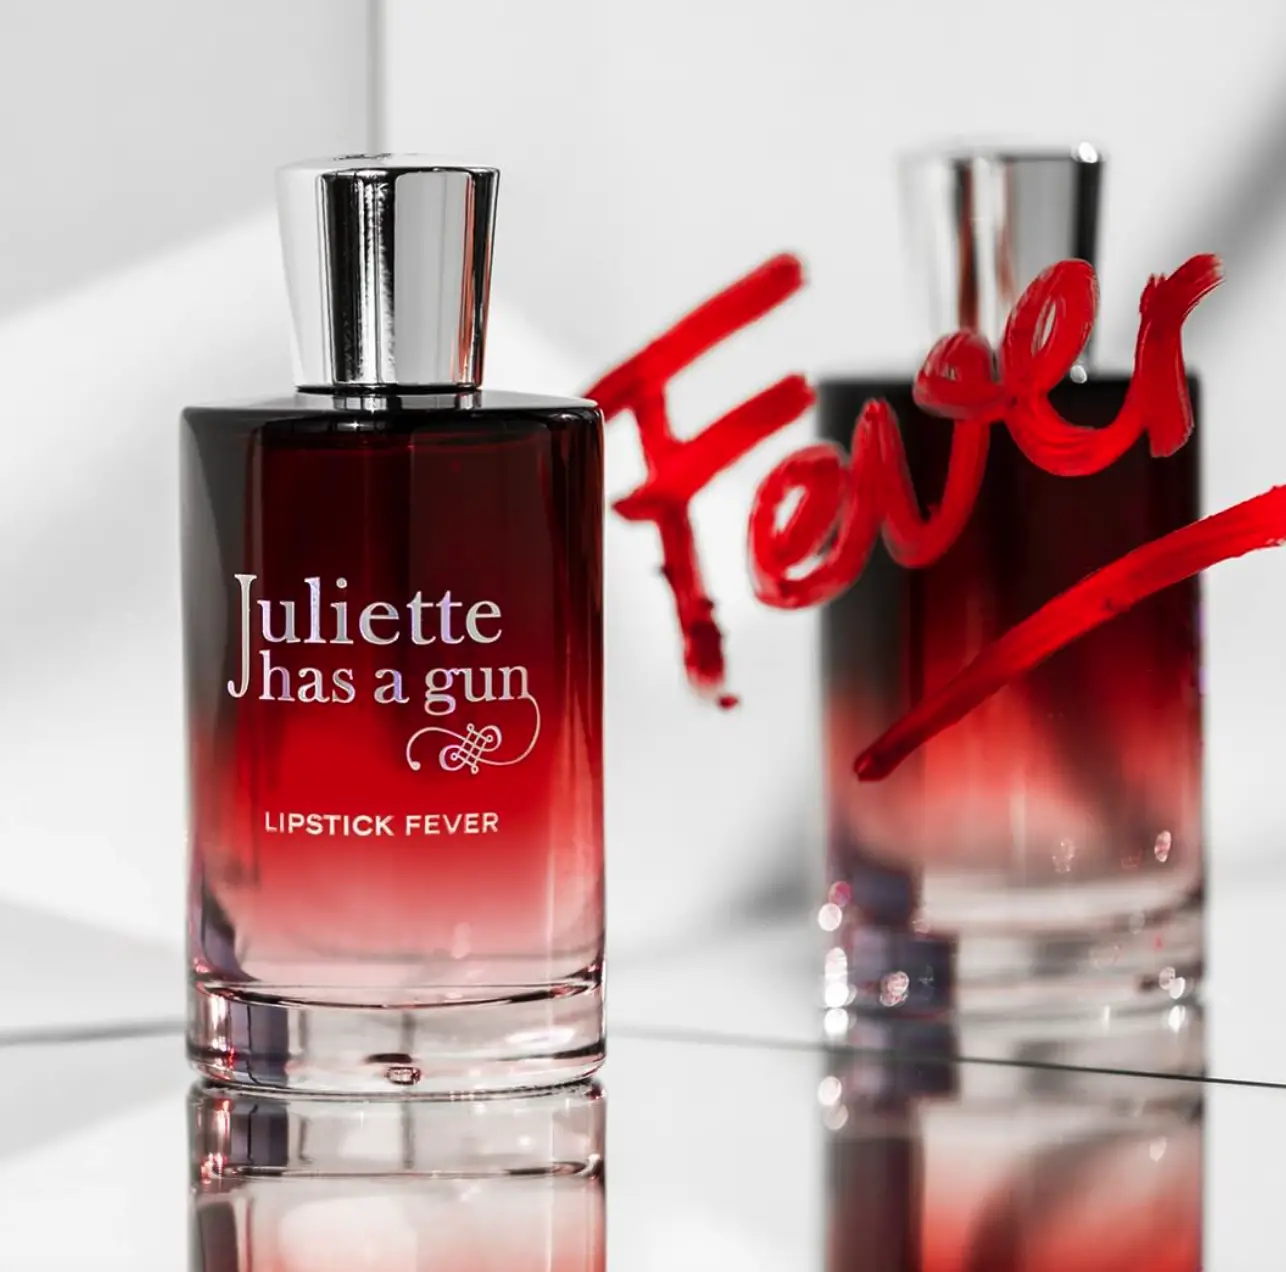 Juliette Has A Gun Lipstick Fever perfume
Best Violet Perfumes